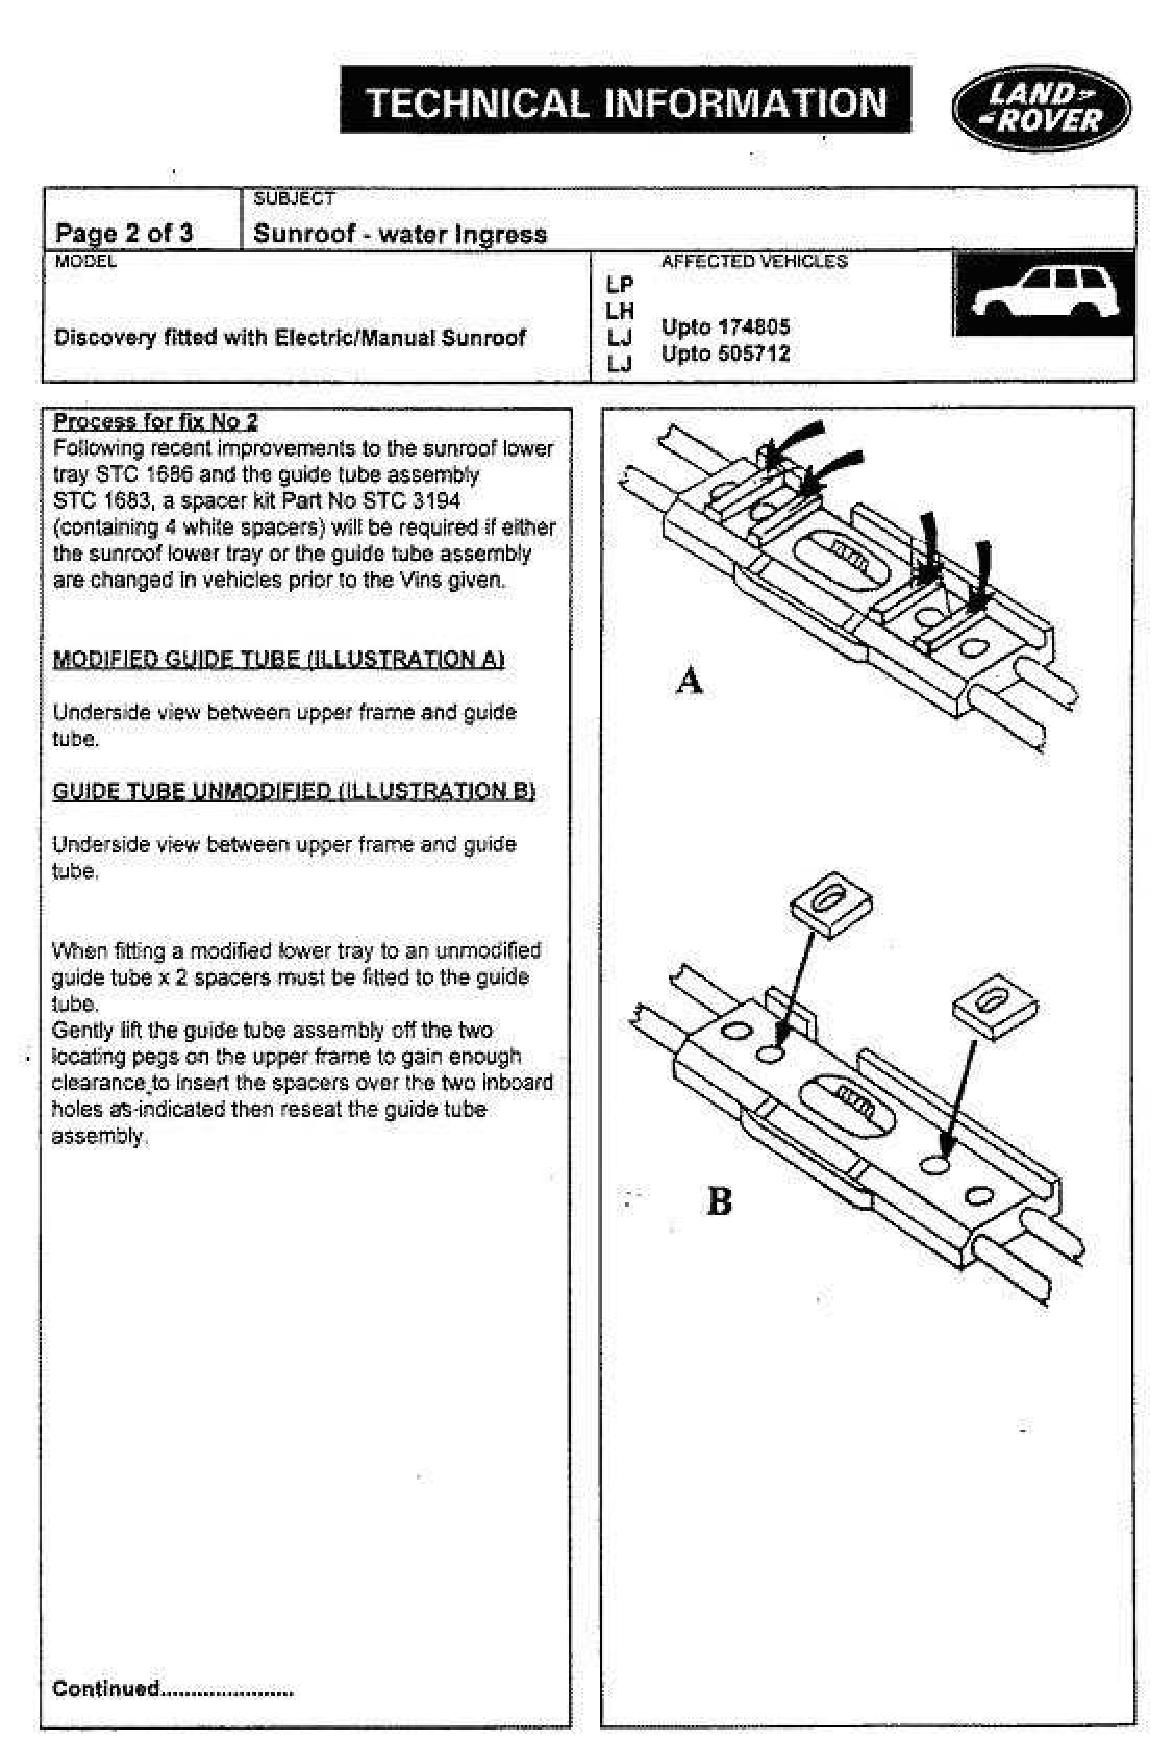 Land Rover Discovery Water Ingress Manual | LandyZone - Land Rover Forum